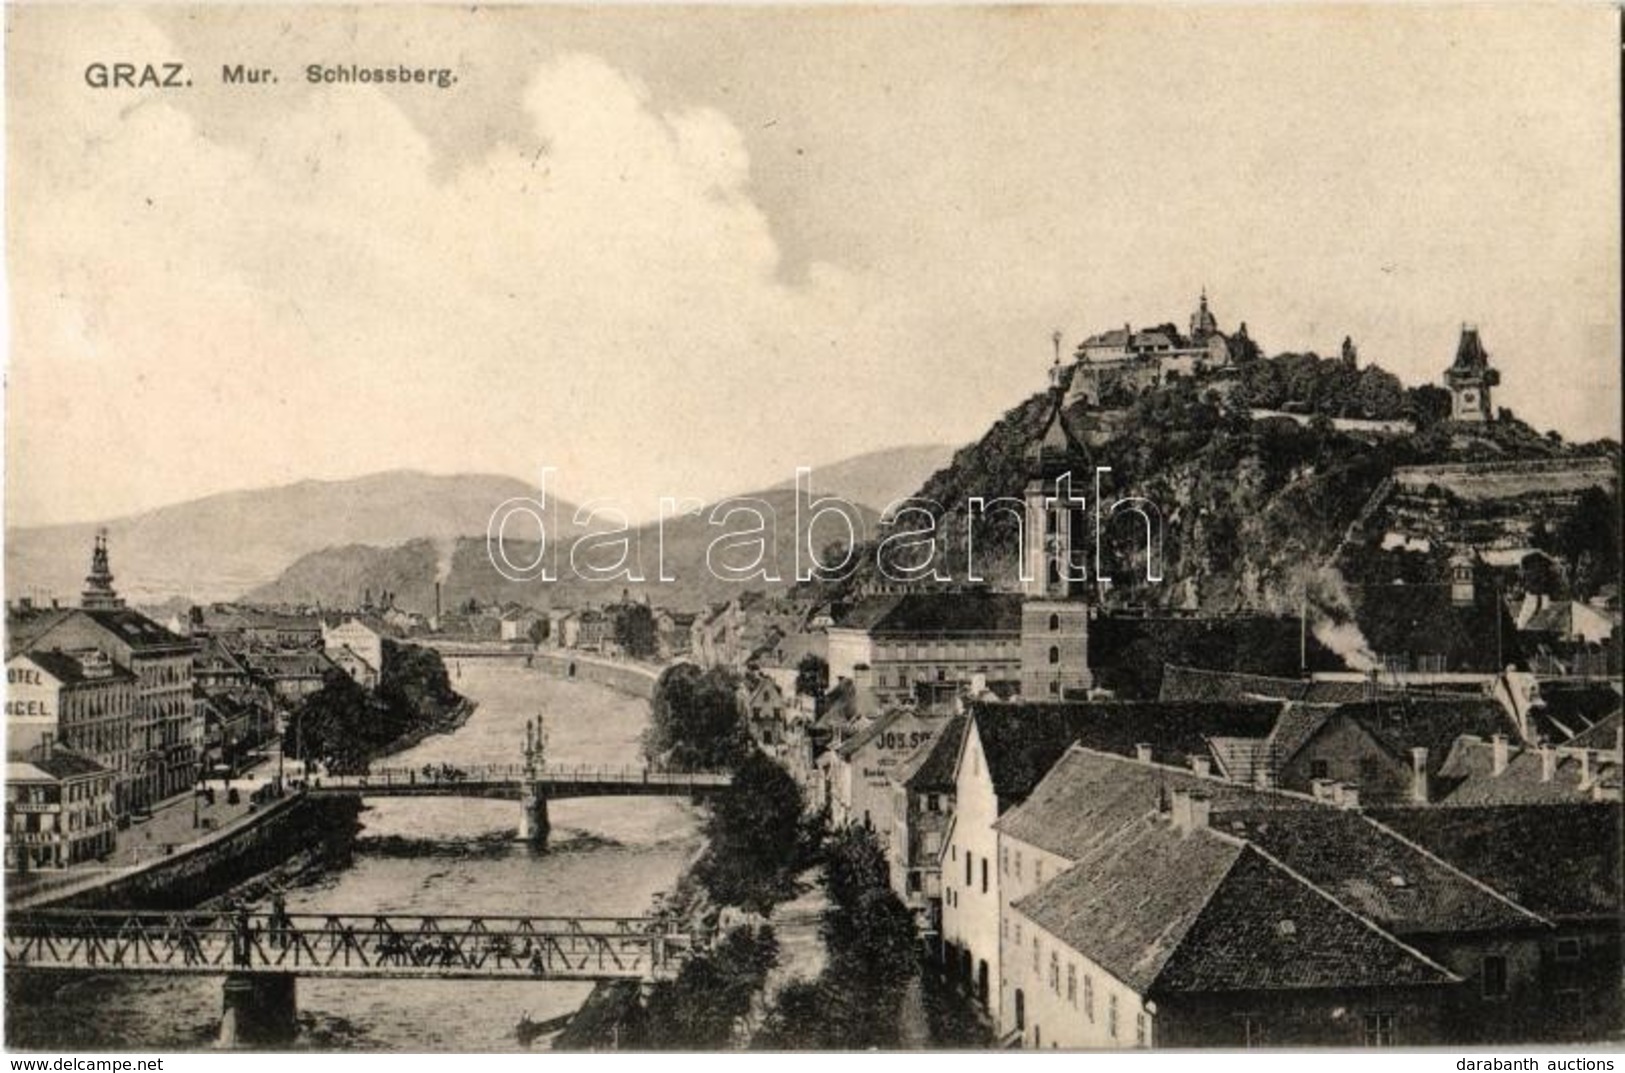 T2 1907 Graz, Mur, Schlossberg / Castle Hill, Bridge, Hotel. L. Strohschneider No. 563. - Ohne Zuordnung